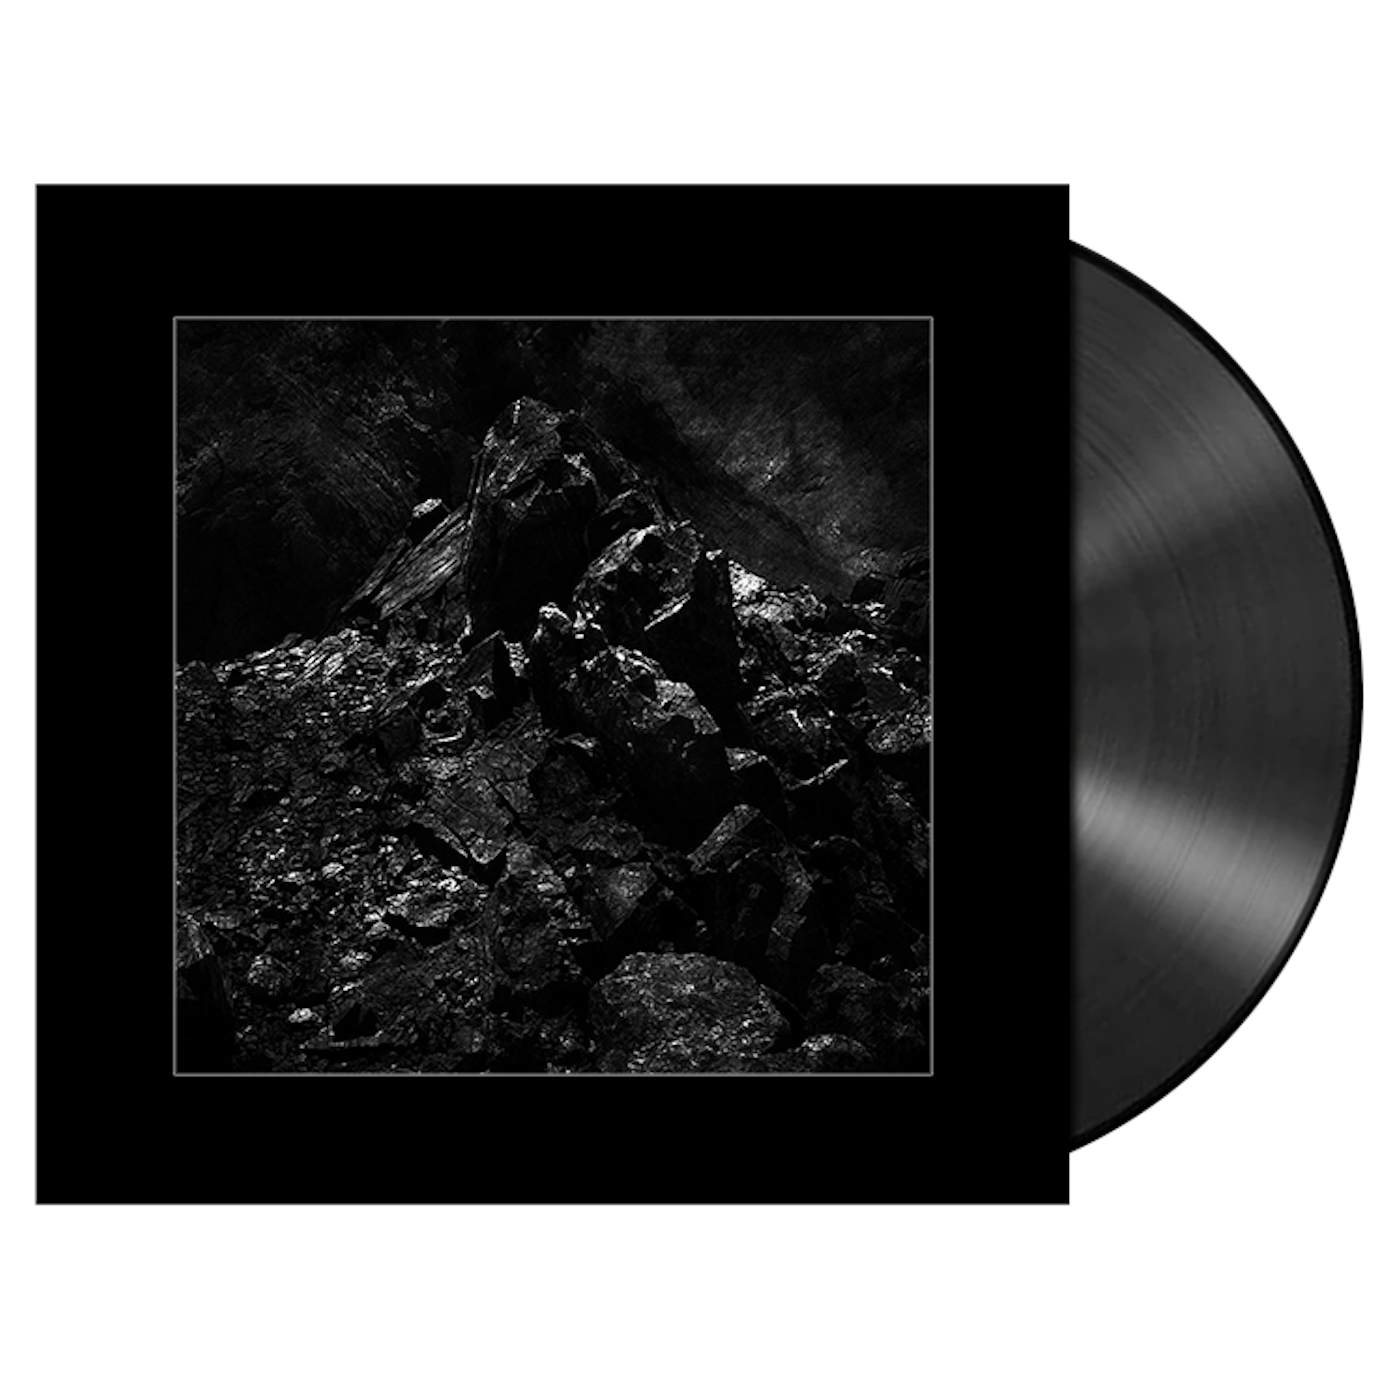 DEATHSPELL OMEGA - 'The Long Defeat' LP (Vinyl)